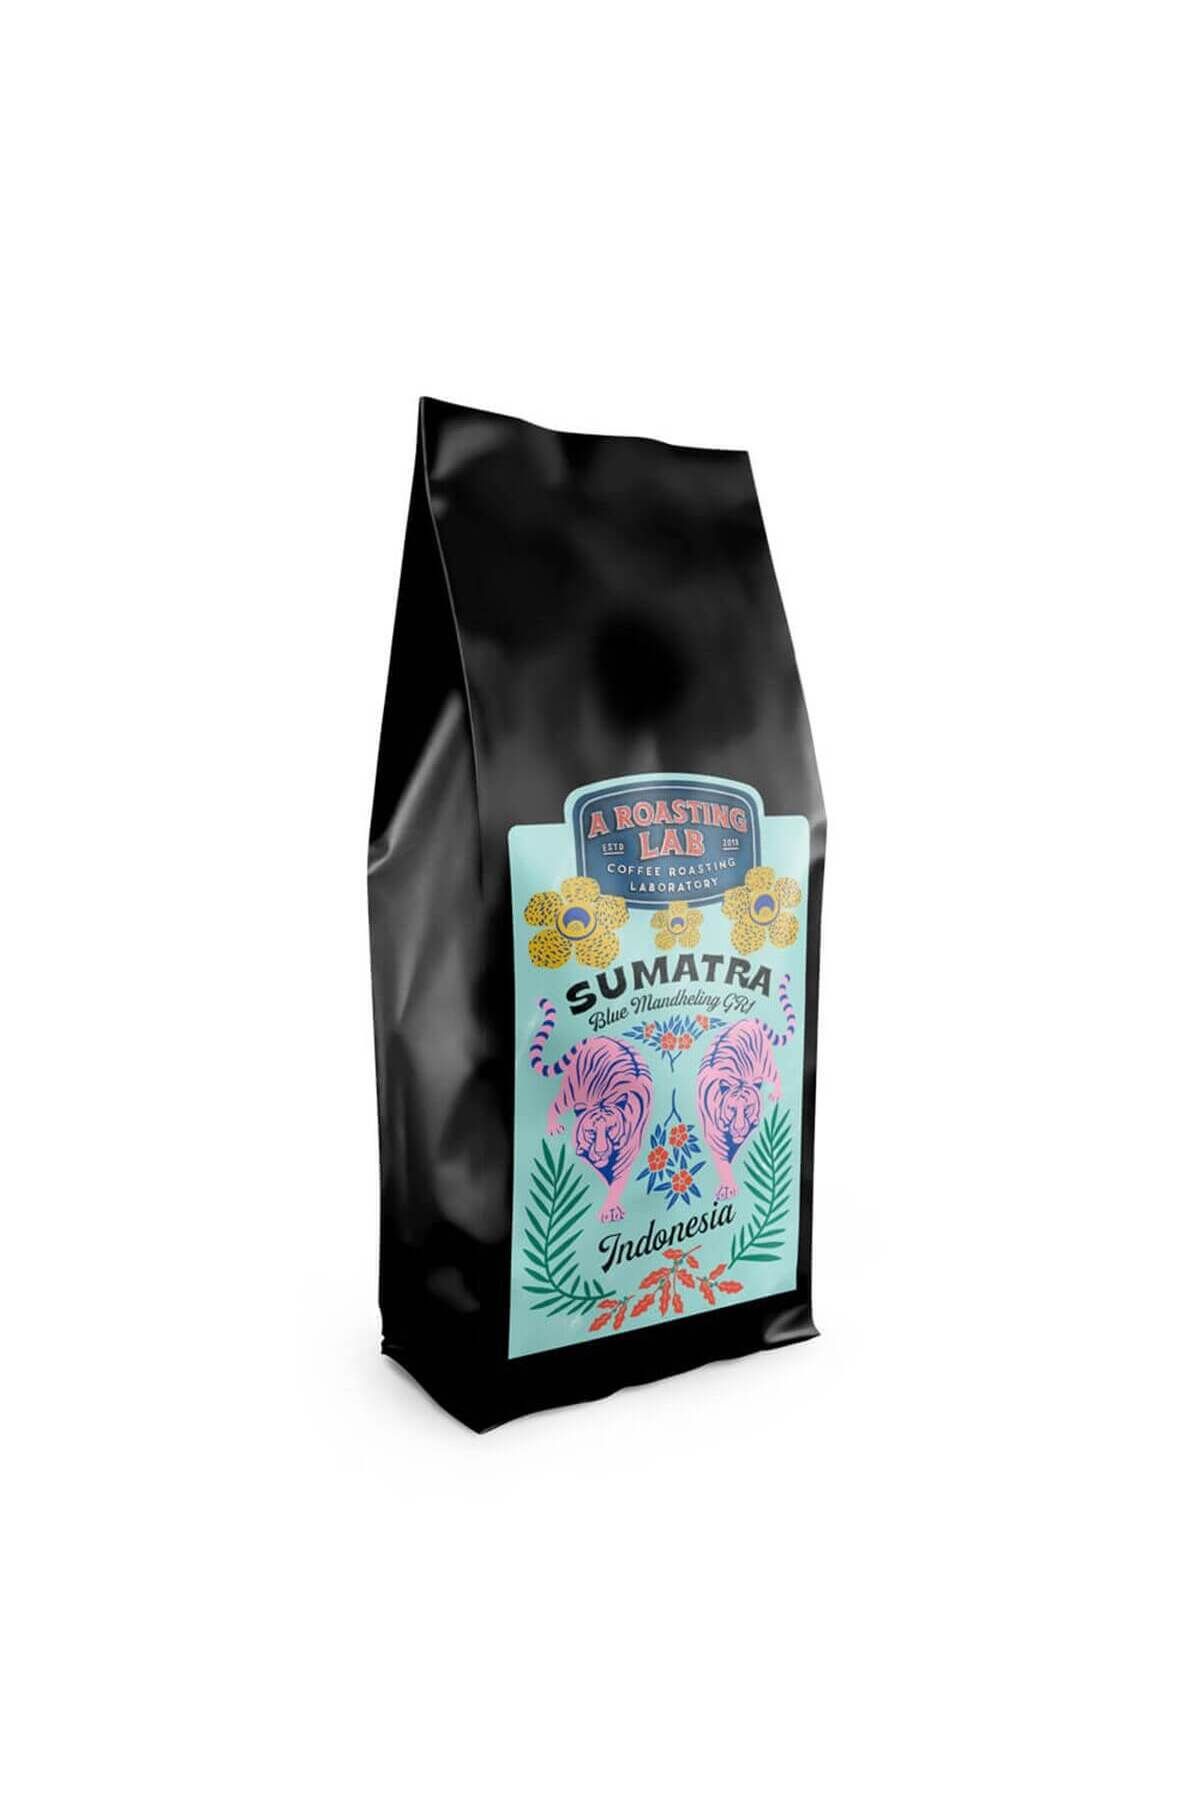 A Roasting Lab Indonesia Sumatra Blue Mandheling (250 GRAM) Filtre Kahve